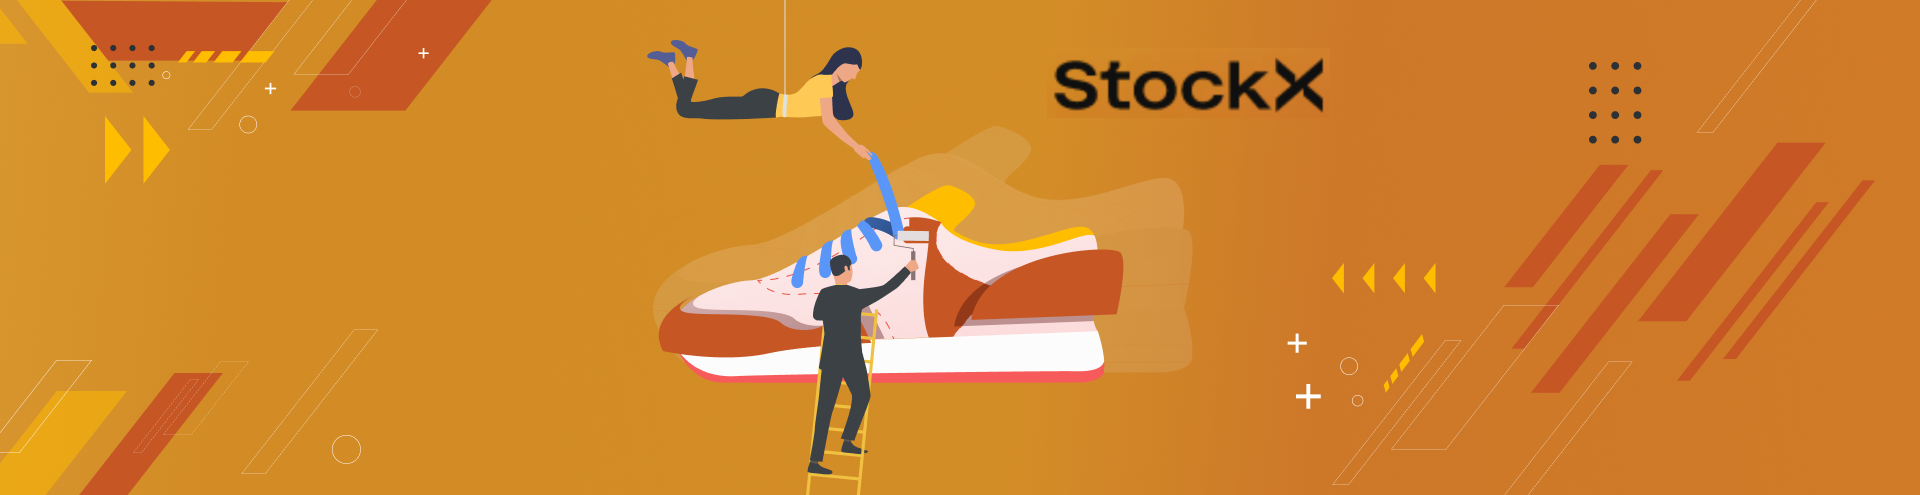 StockX Marketplace Development Guide: The Secret of $3.8 Billion Success